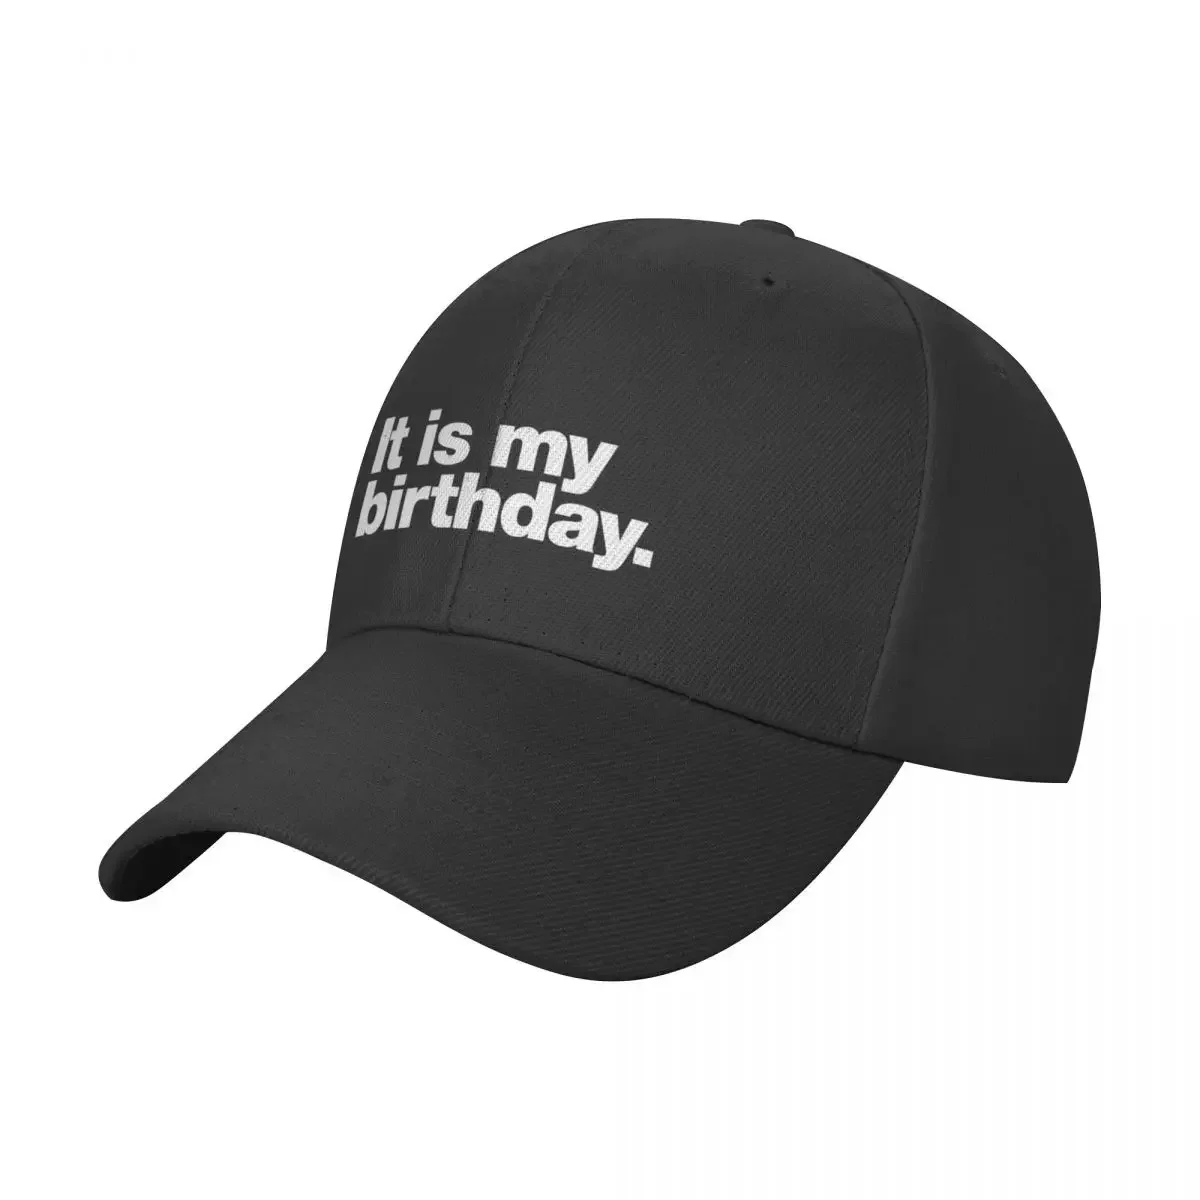 

It is my birthday. Baseball Cap Sports Cap Christmas Hat Golf Wear Men Women's